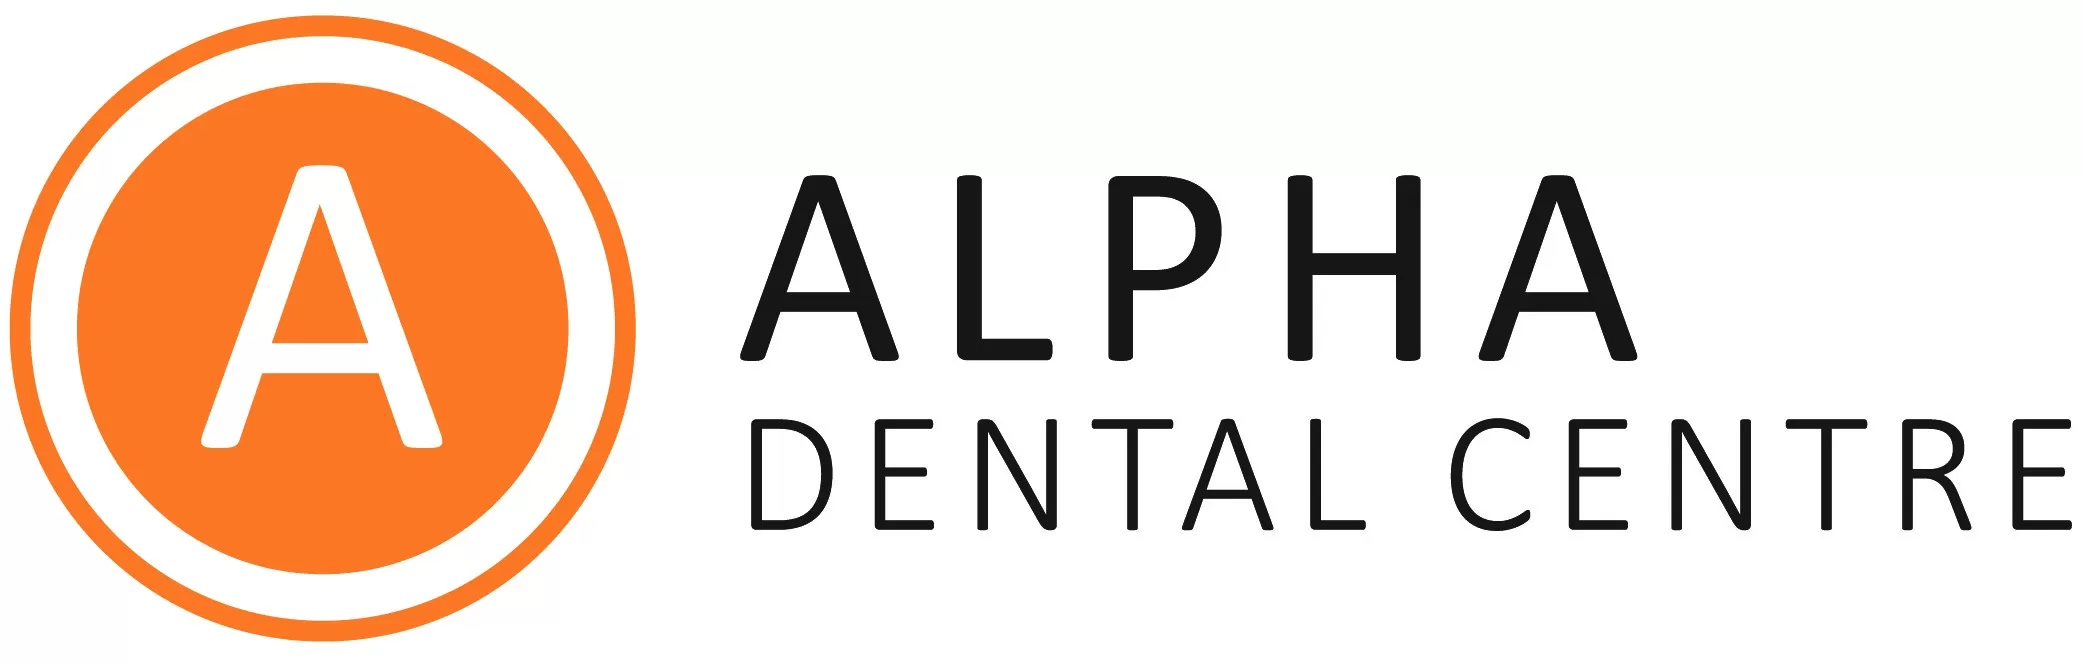 Alpha dental center logo